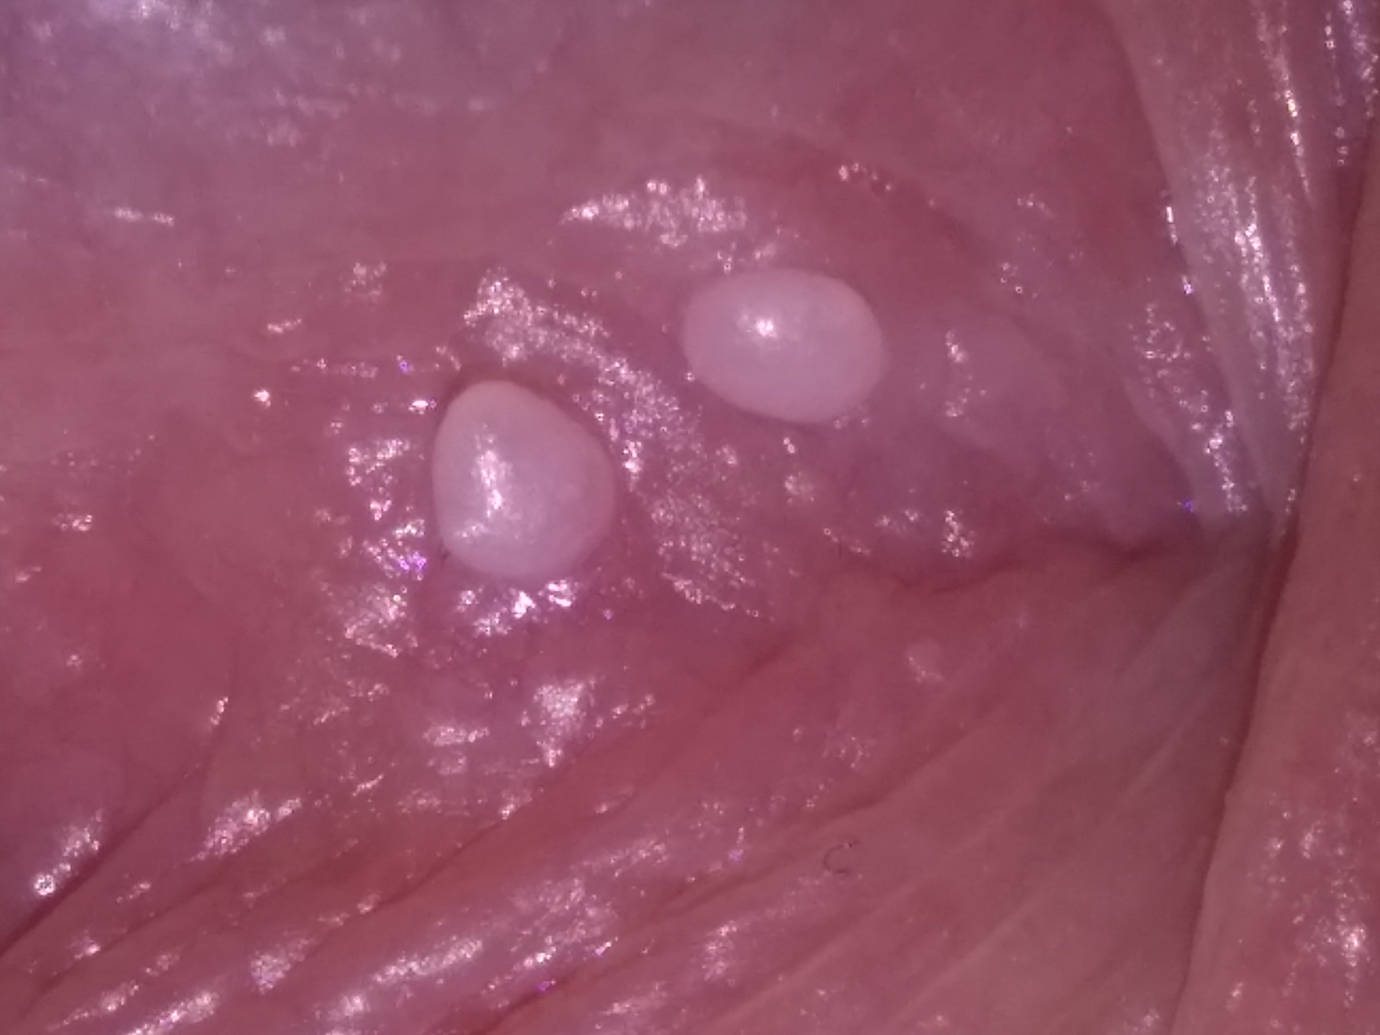 small white spots on penile shaft - www.optuseducation.com.